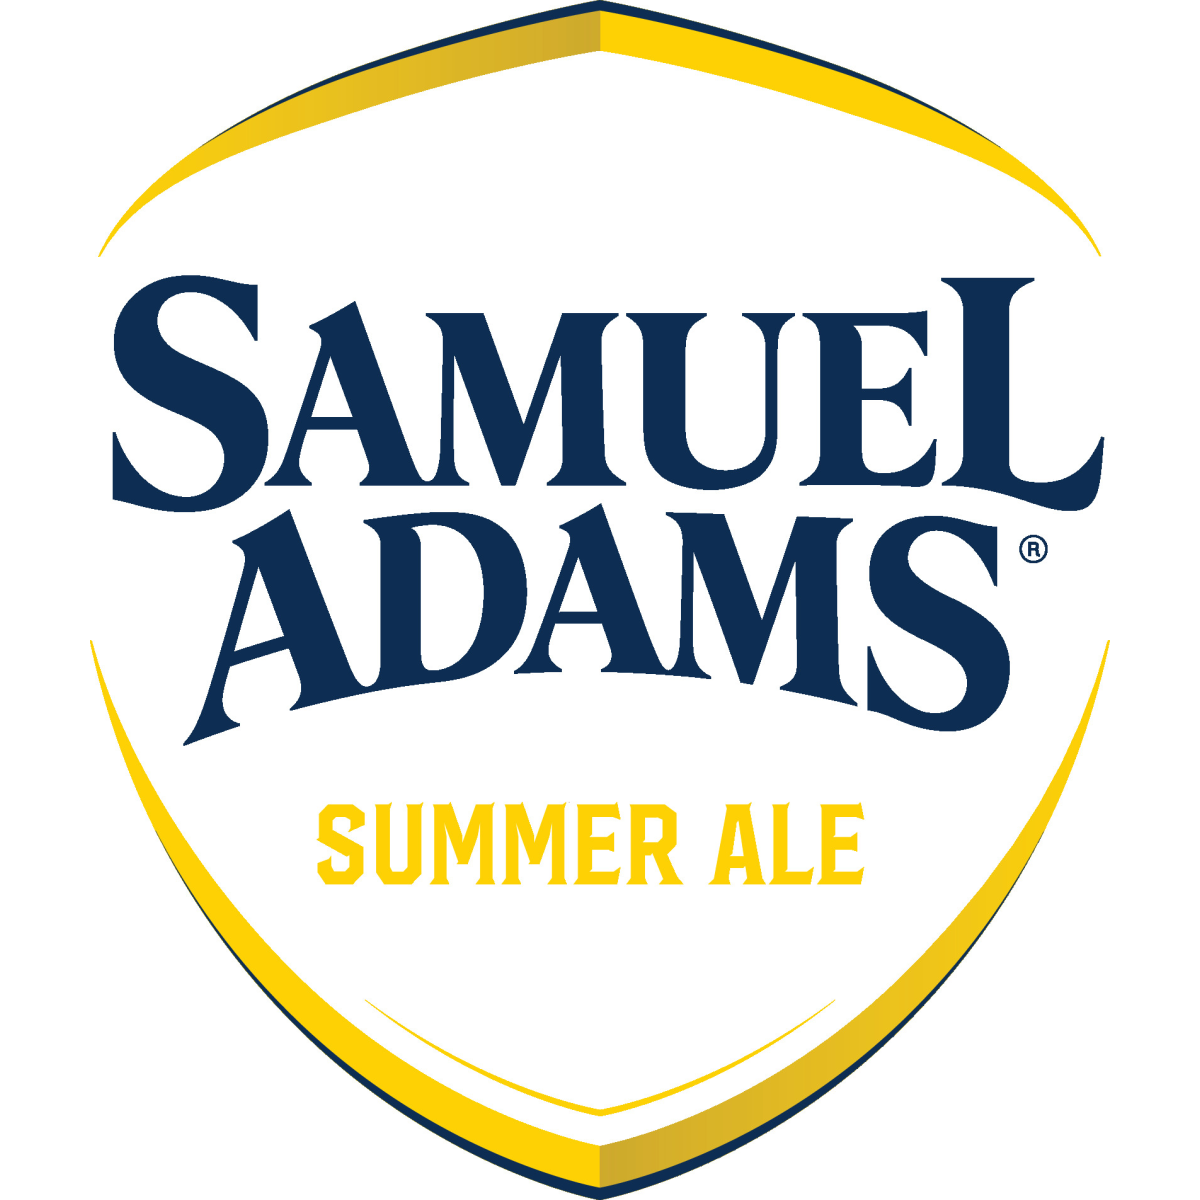 Samuel Adams Summer Ale - Finley Beer